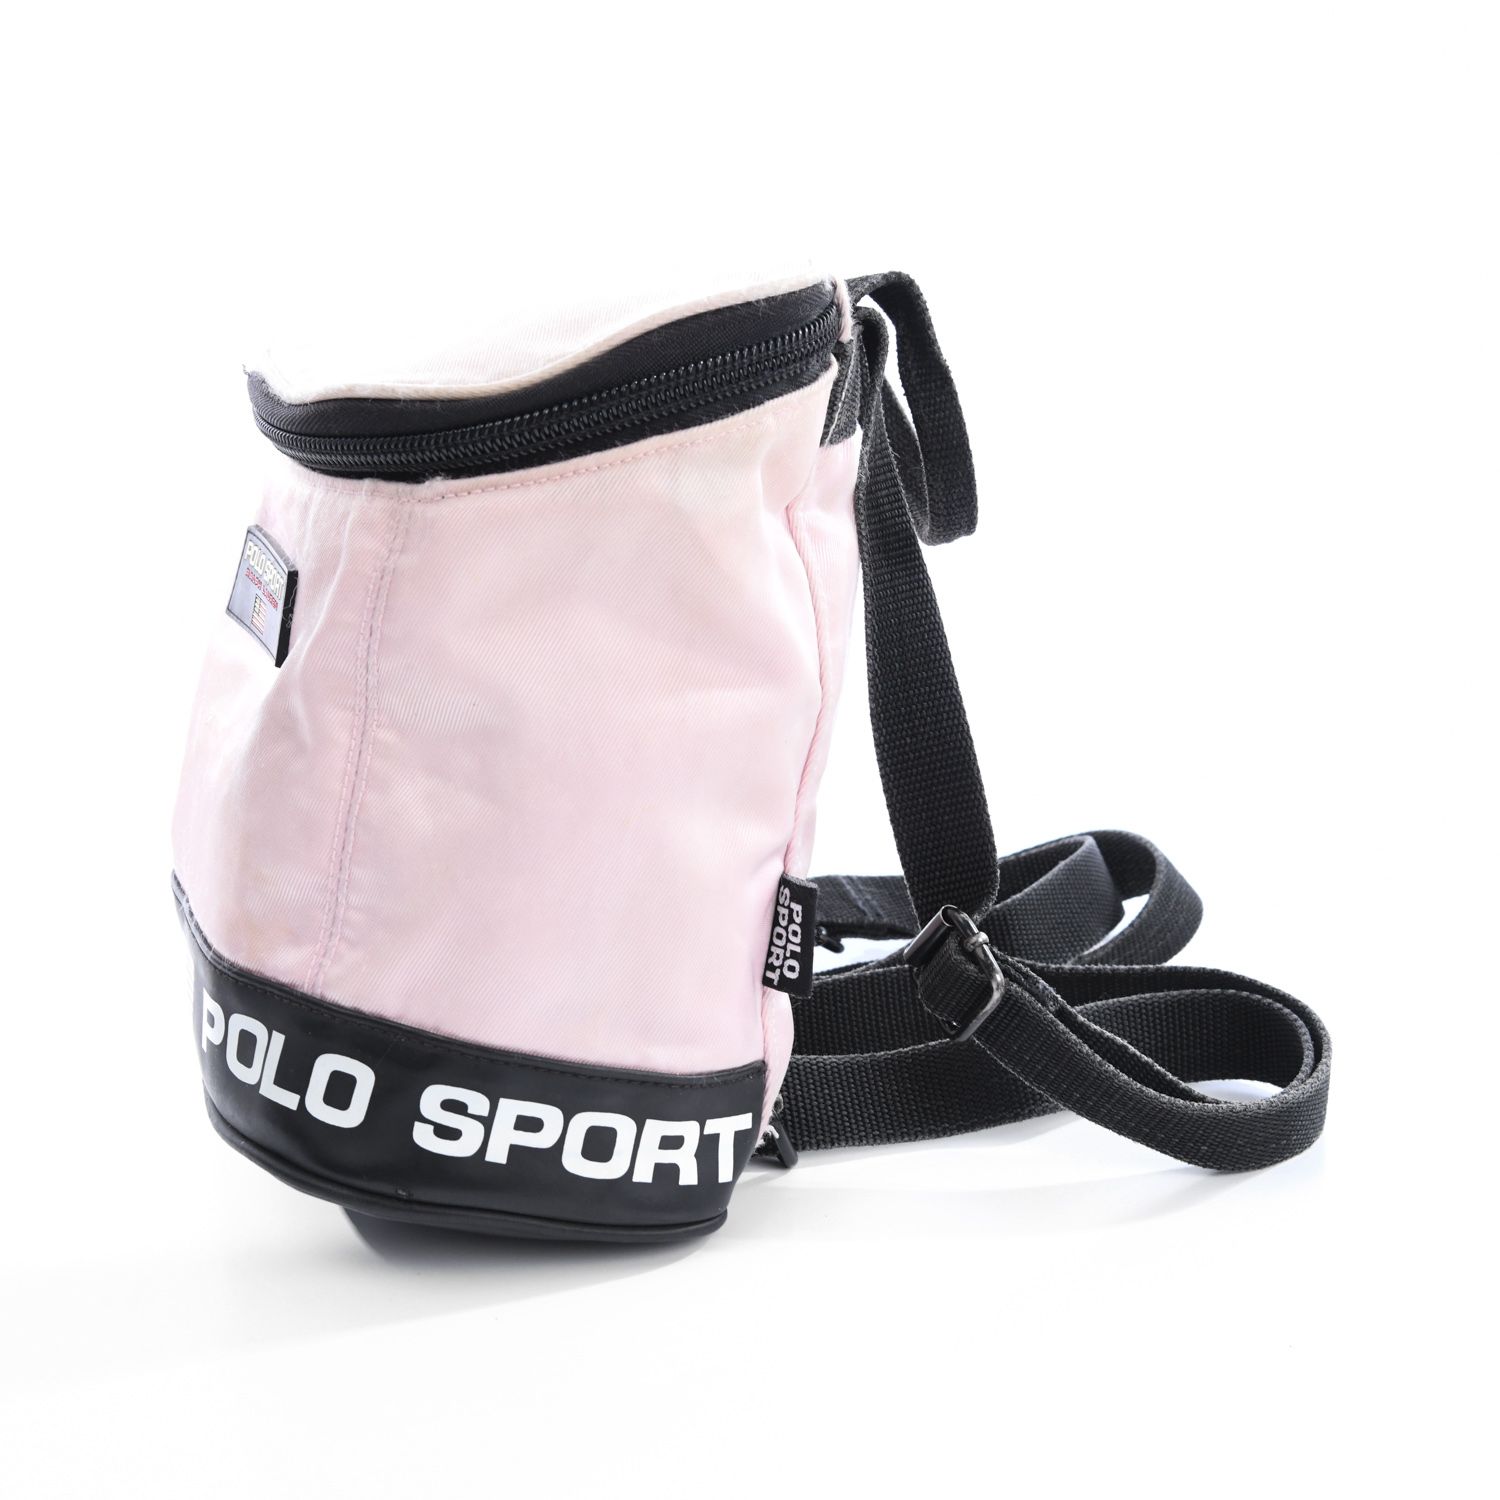 Ralph Lauren Polo Sport Bag/Small backpack